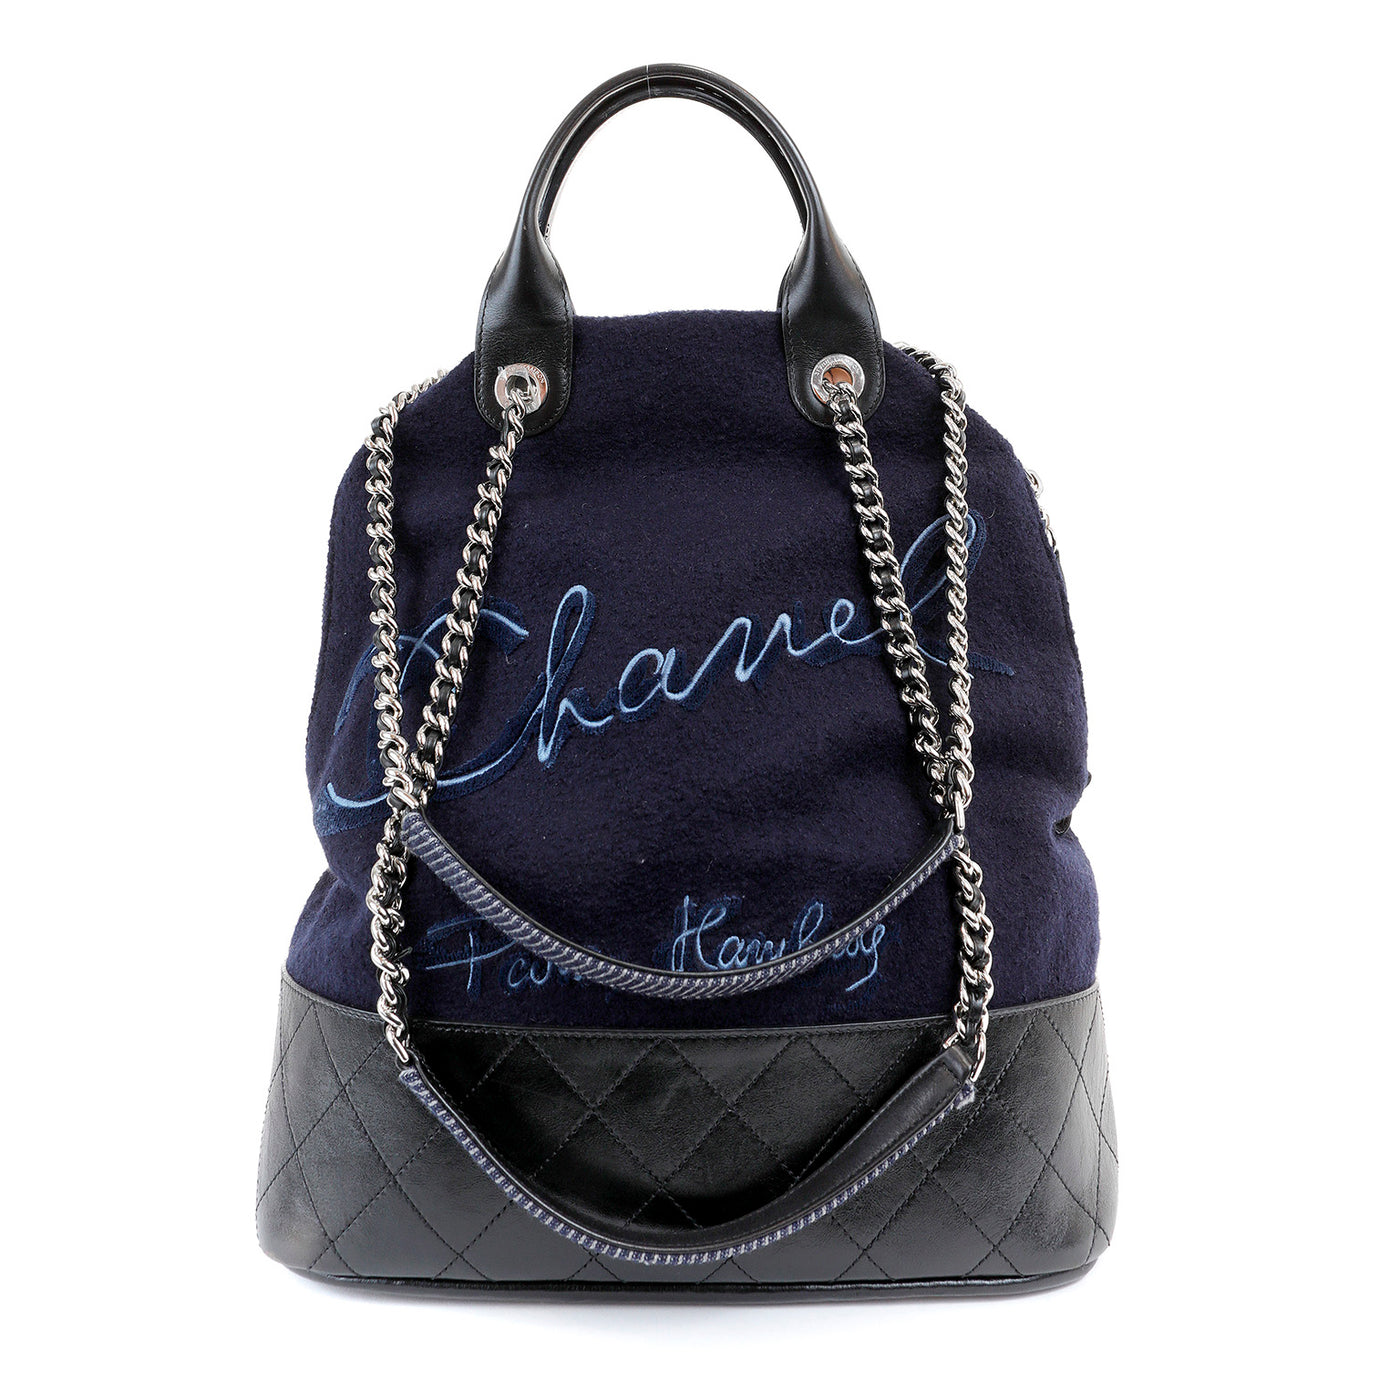 Chanel Navy Blue Felt Paris Hamburg Bowler Bag